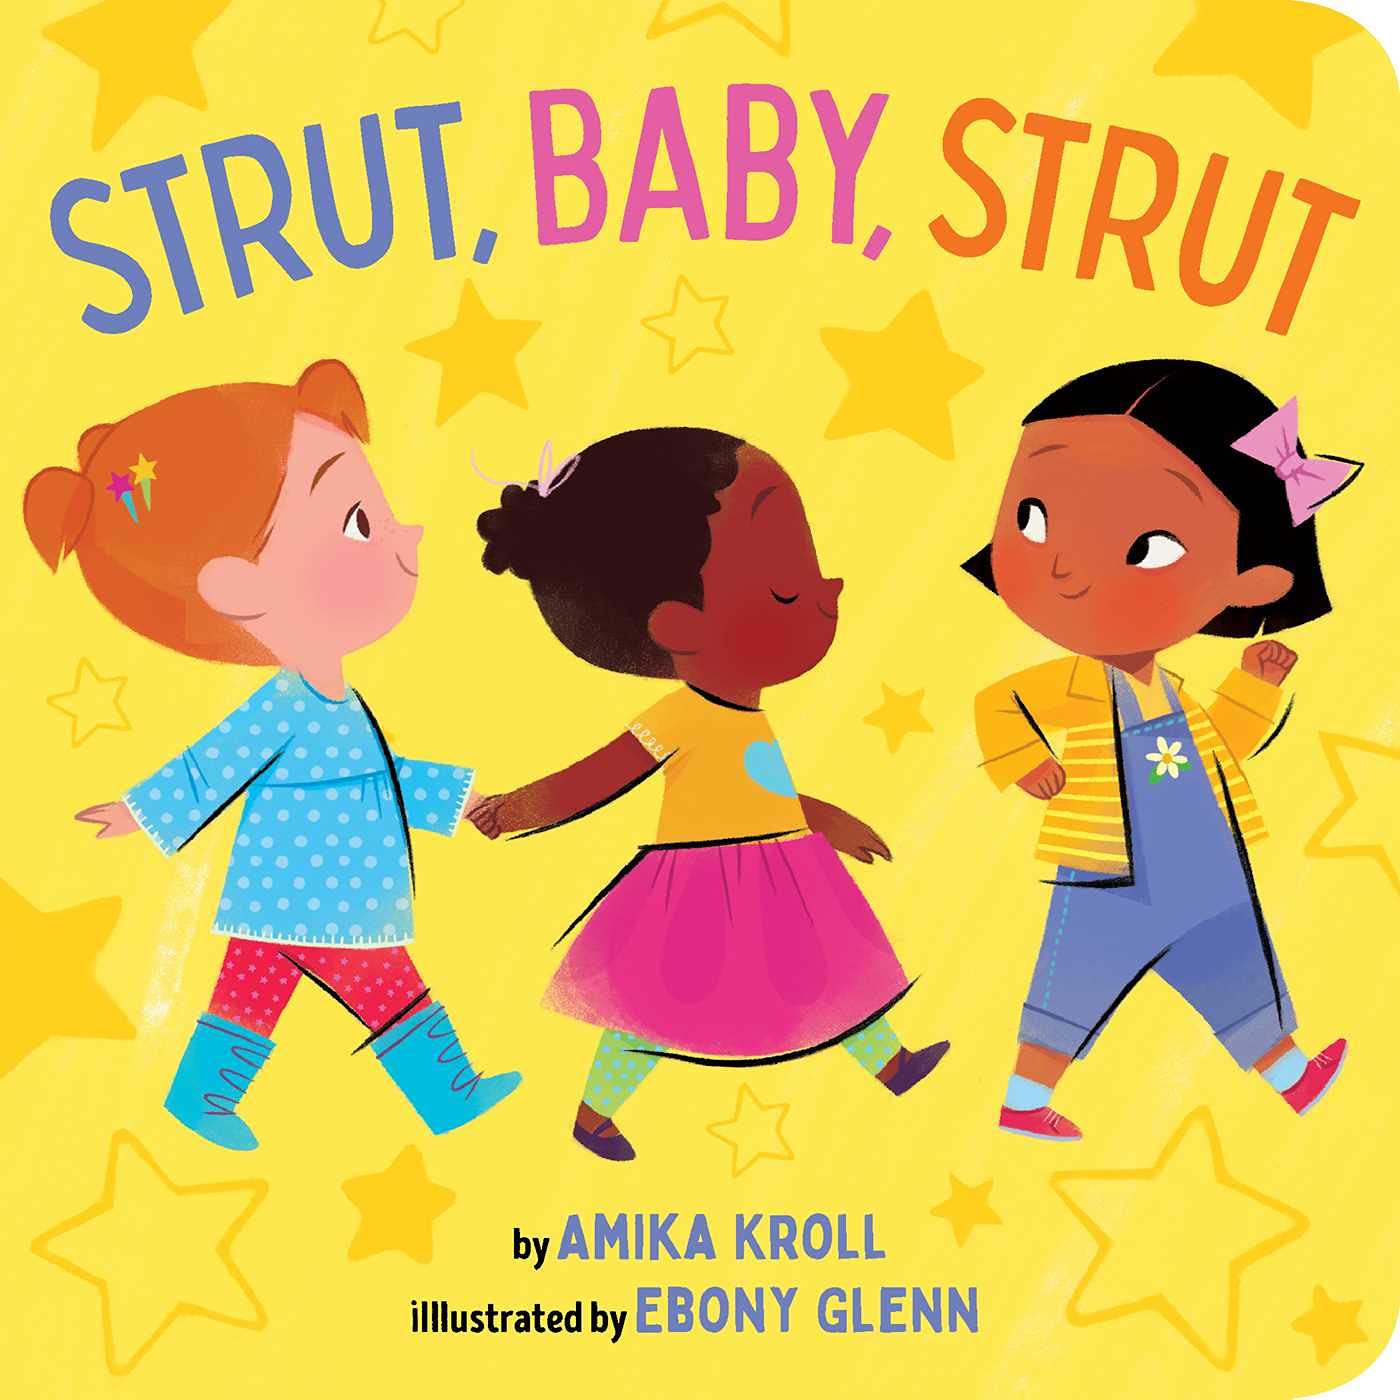 strut, baby, strut - back to school reading list that celebrate diversity